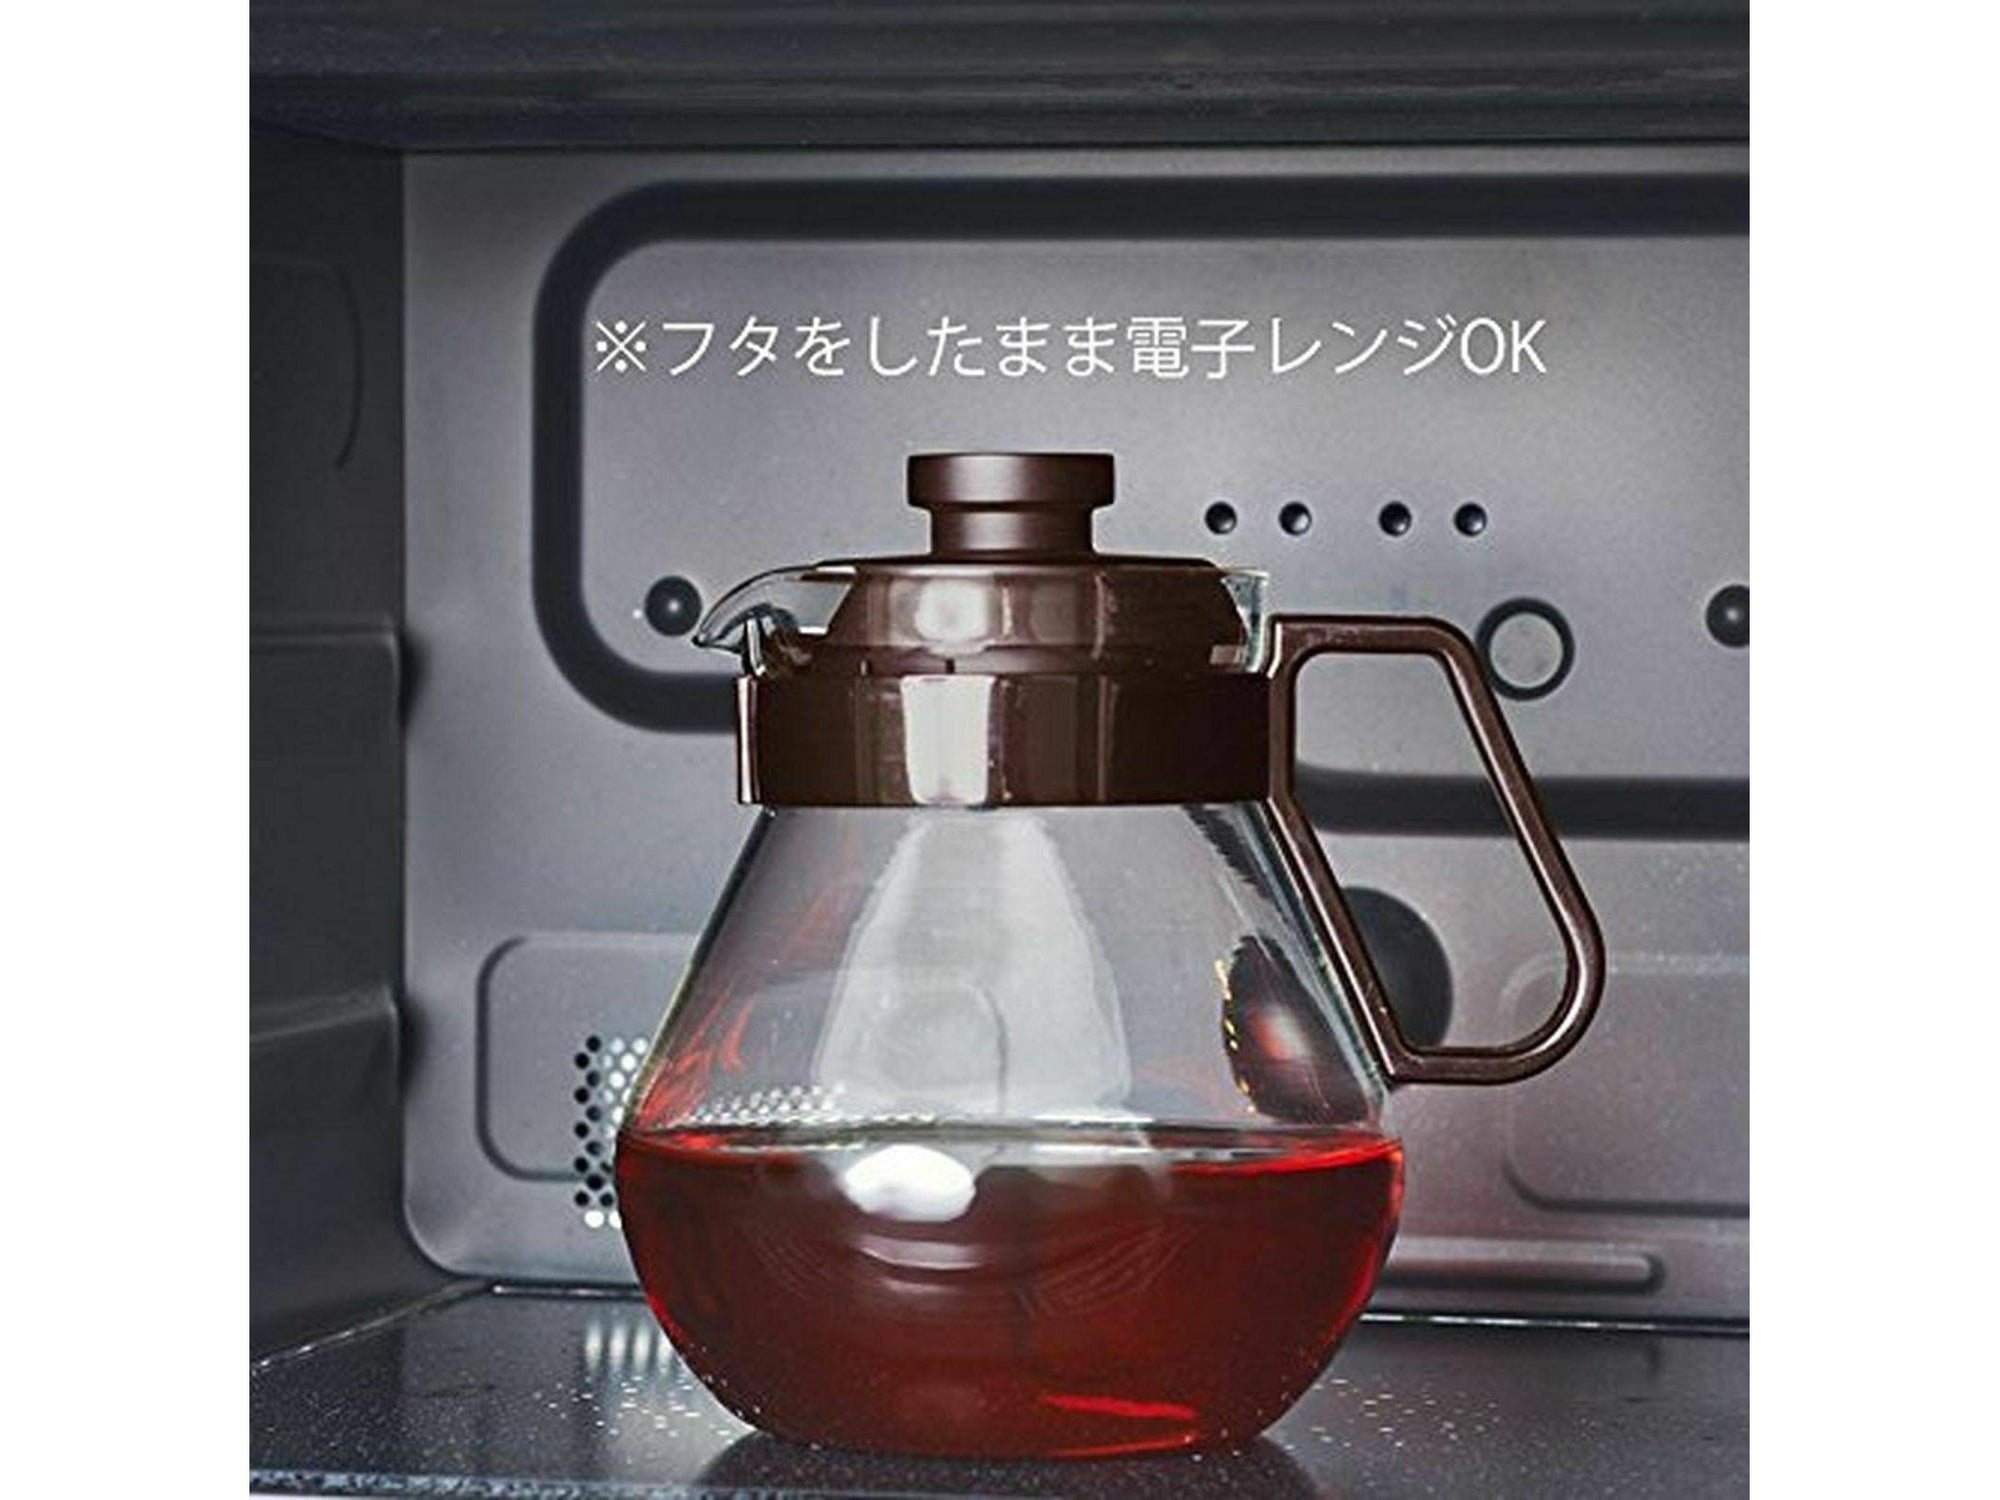 Hario Tea Coffee Server